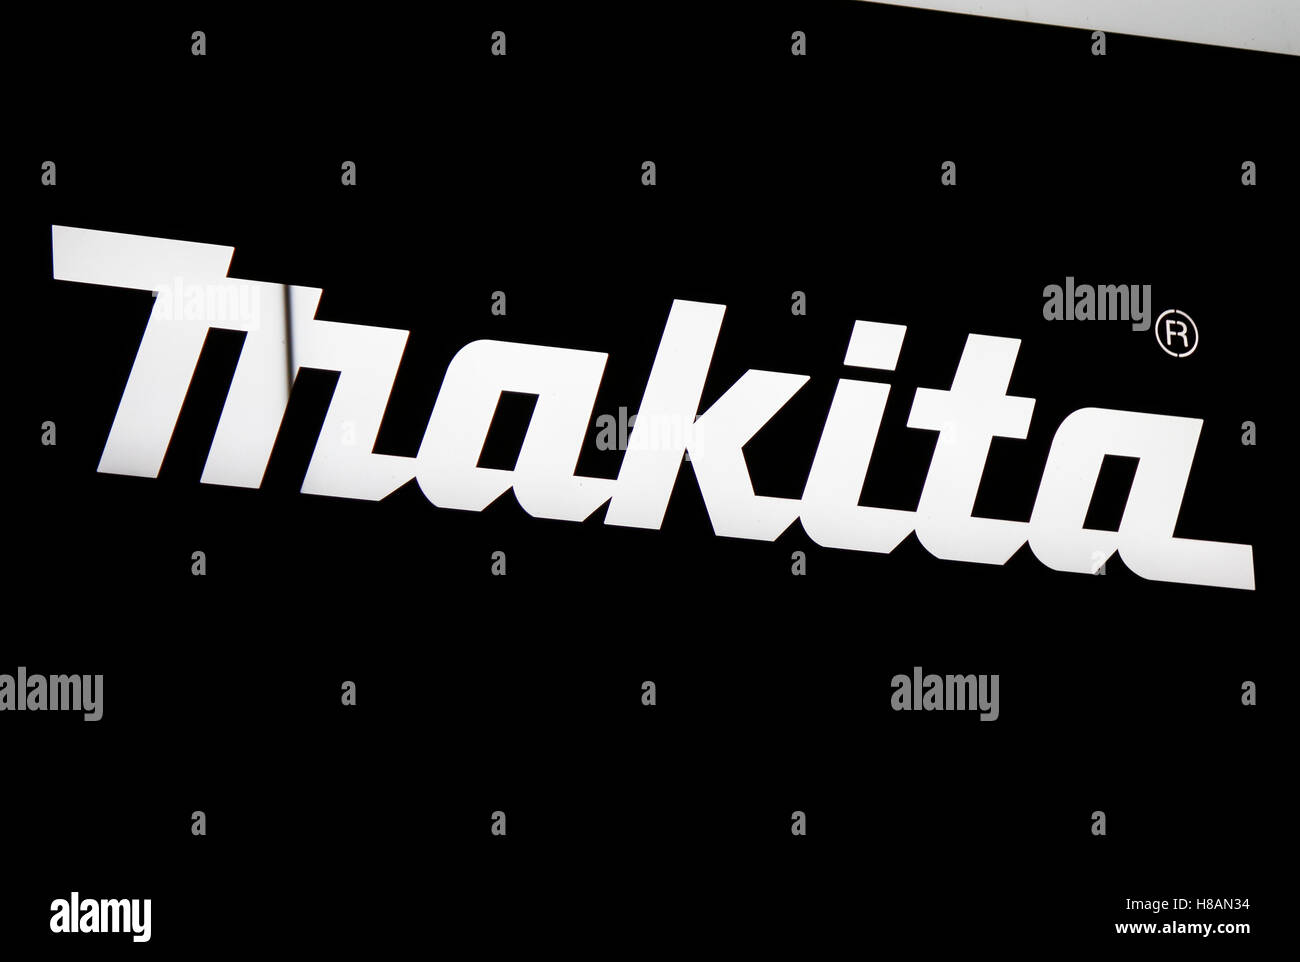 Makita logo hi-res stock photography and images - Alamy